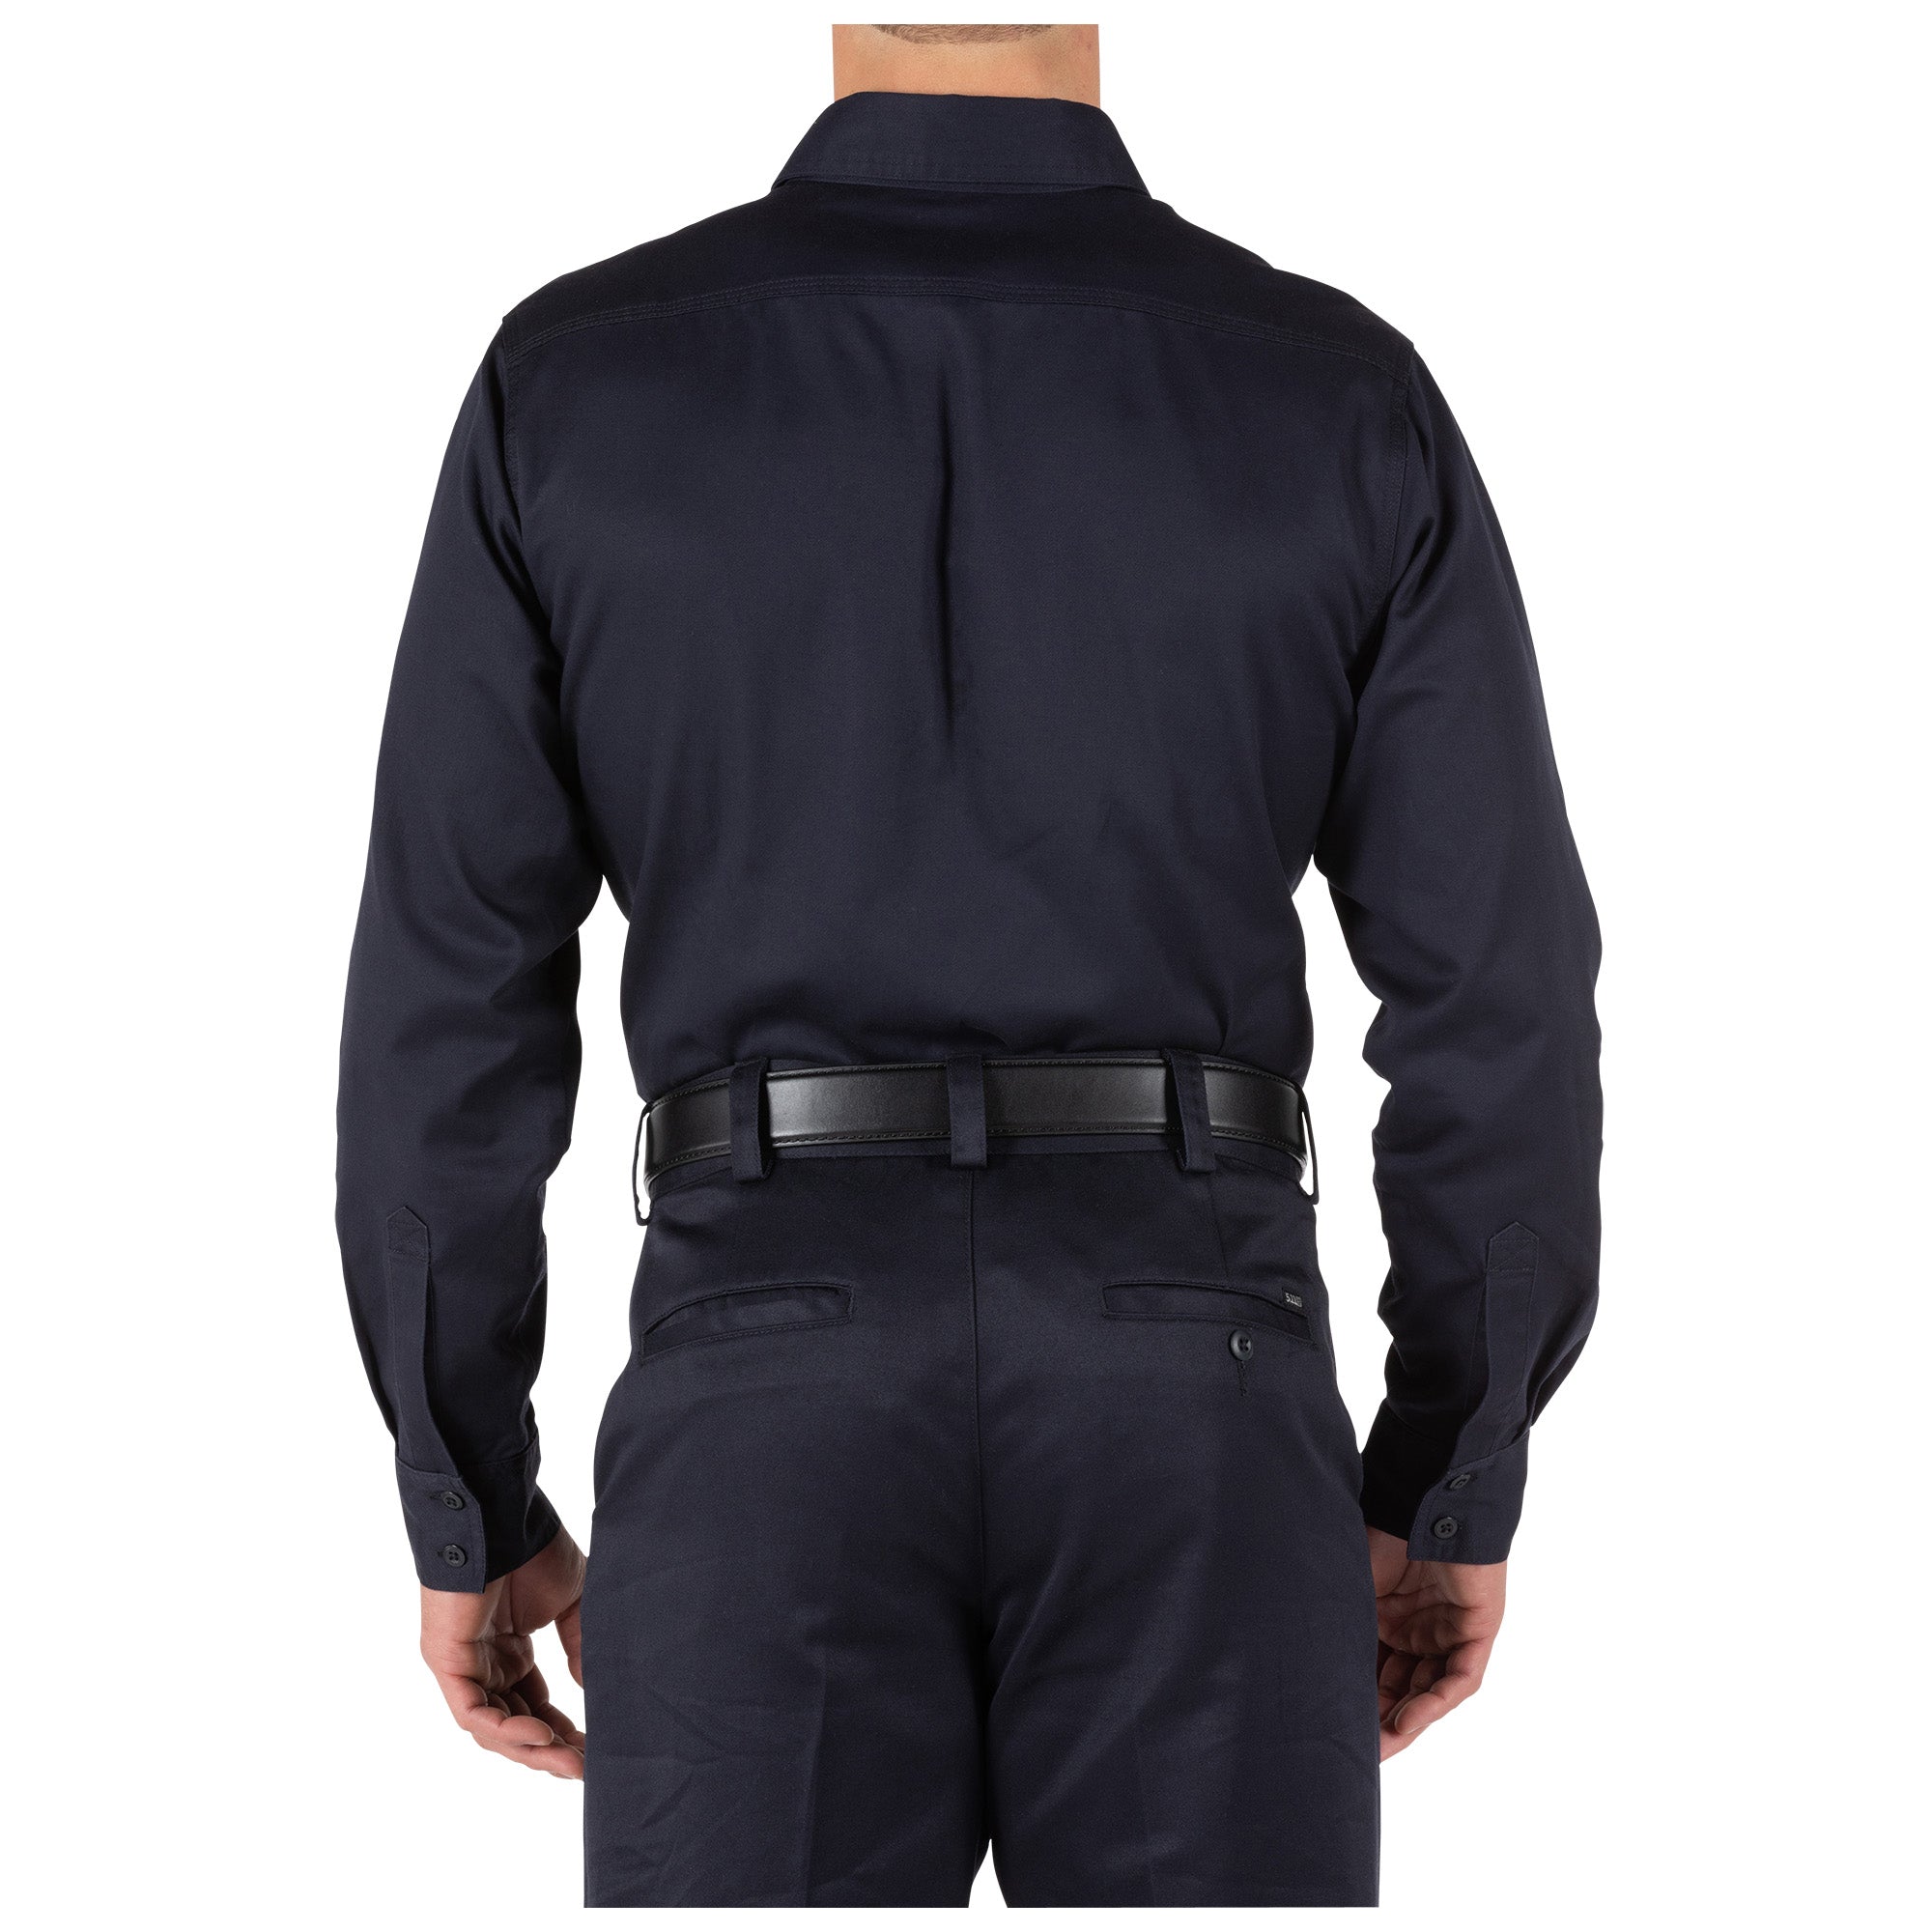 5.11 Tactical Company Long Sleeve Shirt Fire Navy Outerwear 5.11 Tactical Tactical Gear Supplier Tactical Distributors Australia